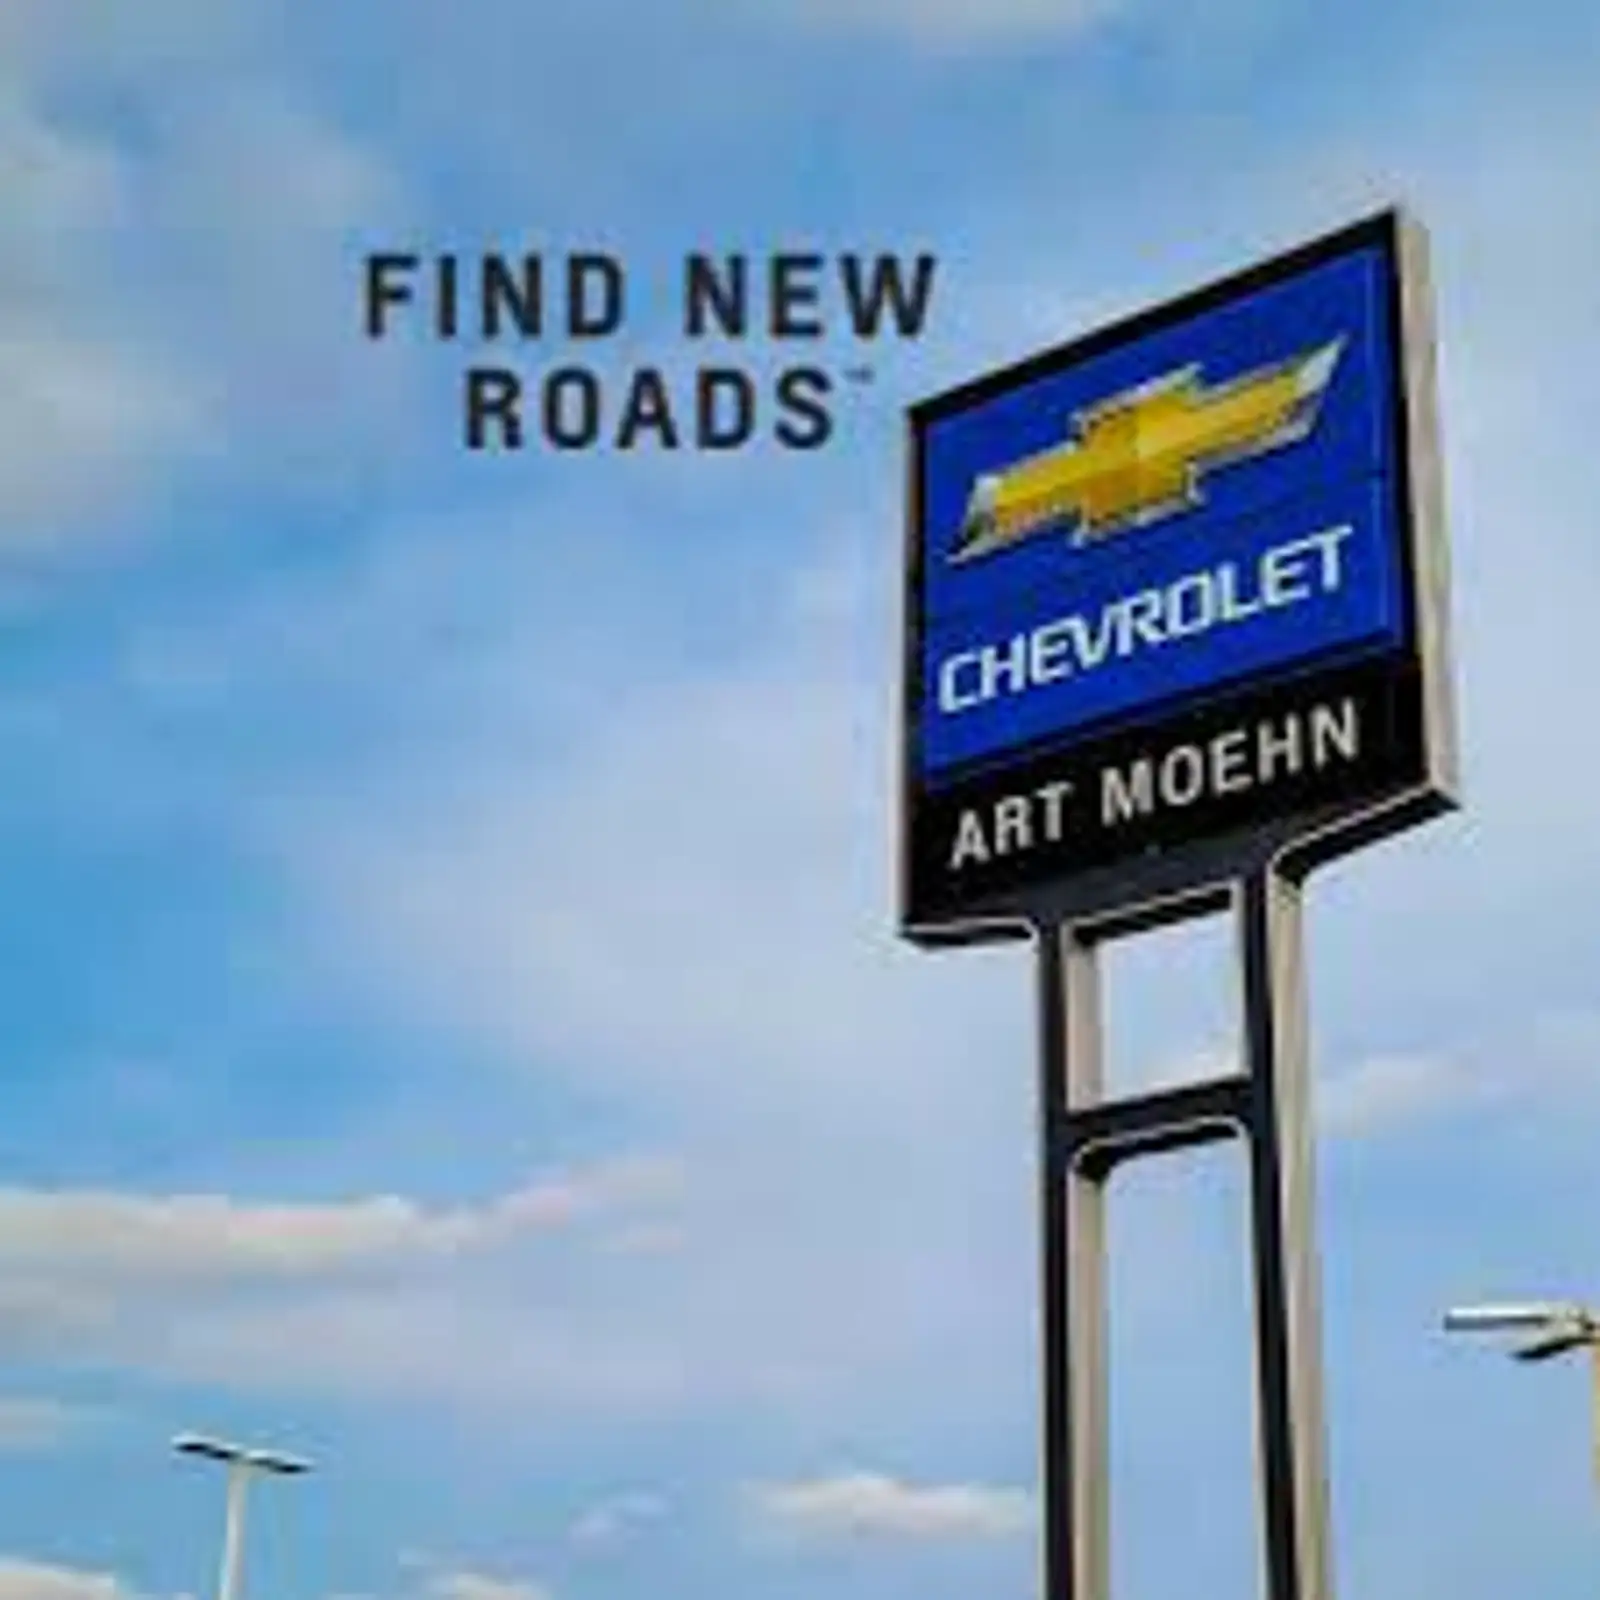 Art Moehn Chevrolet logo